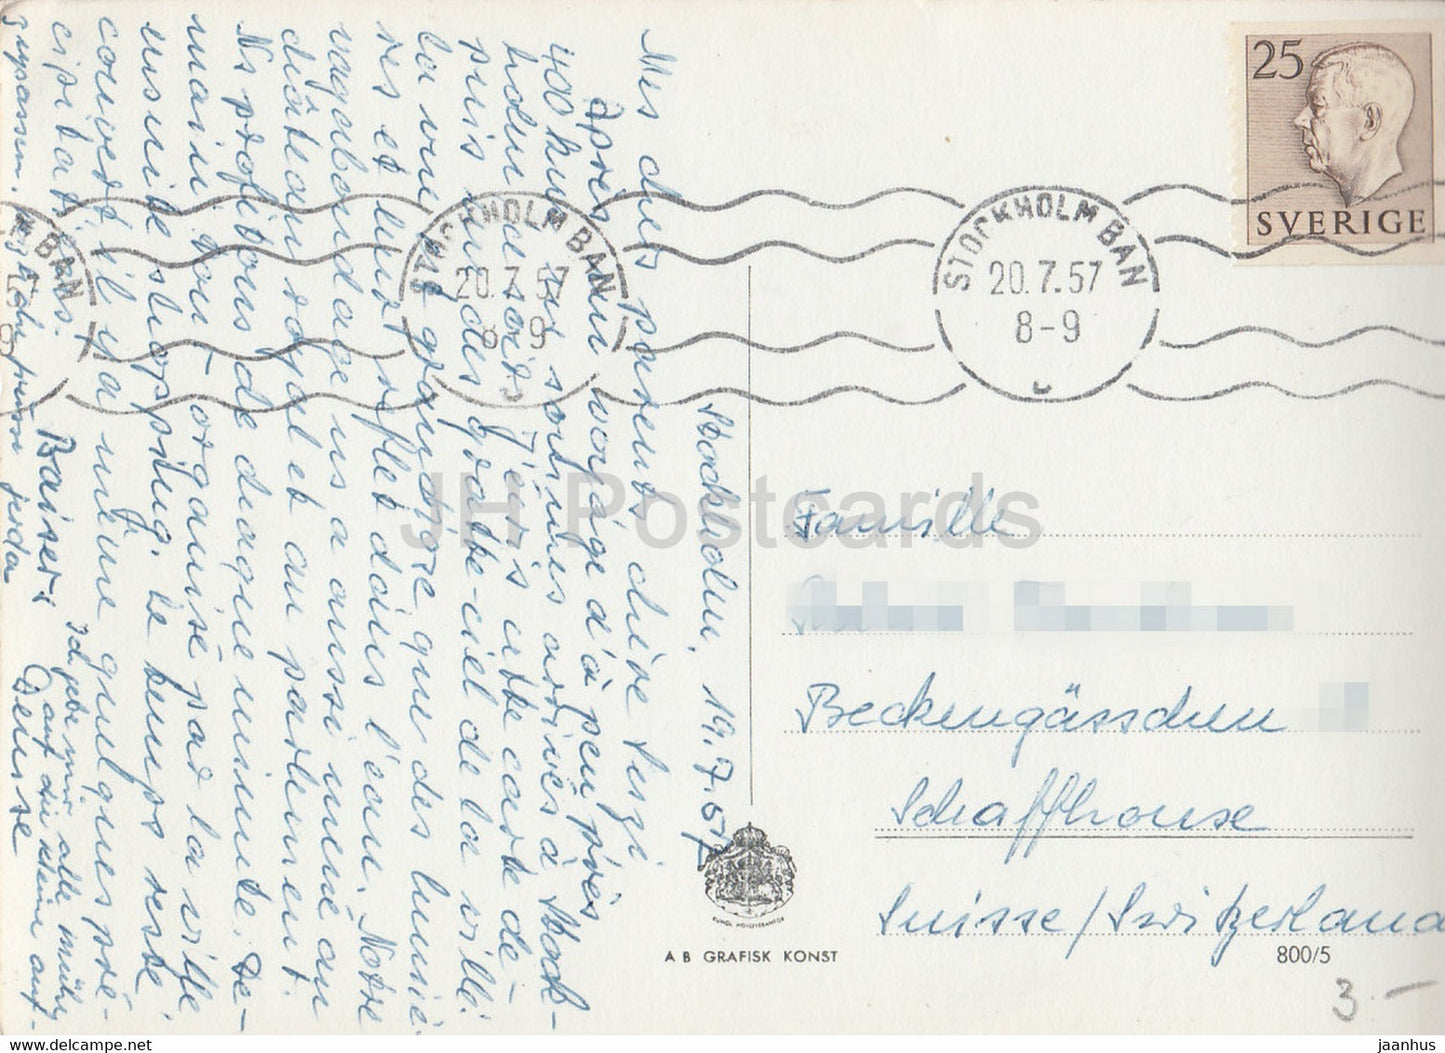 Stockholm - Utsikt fran Stadshustronet - Vue depuis Stadshustornet - carte postale ancienne - 1957 - Suède - utilisé